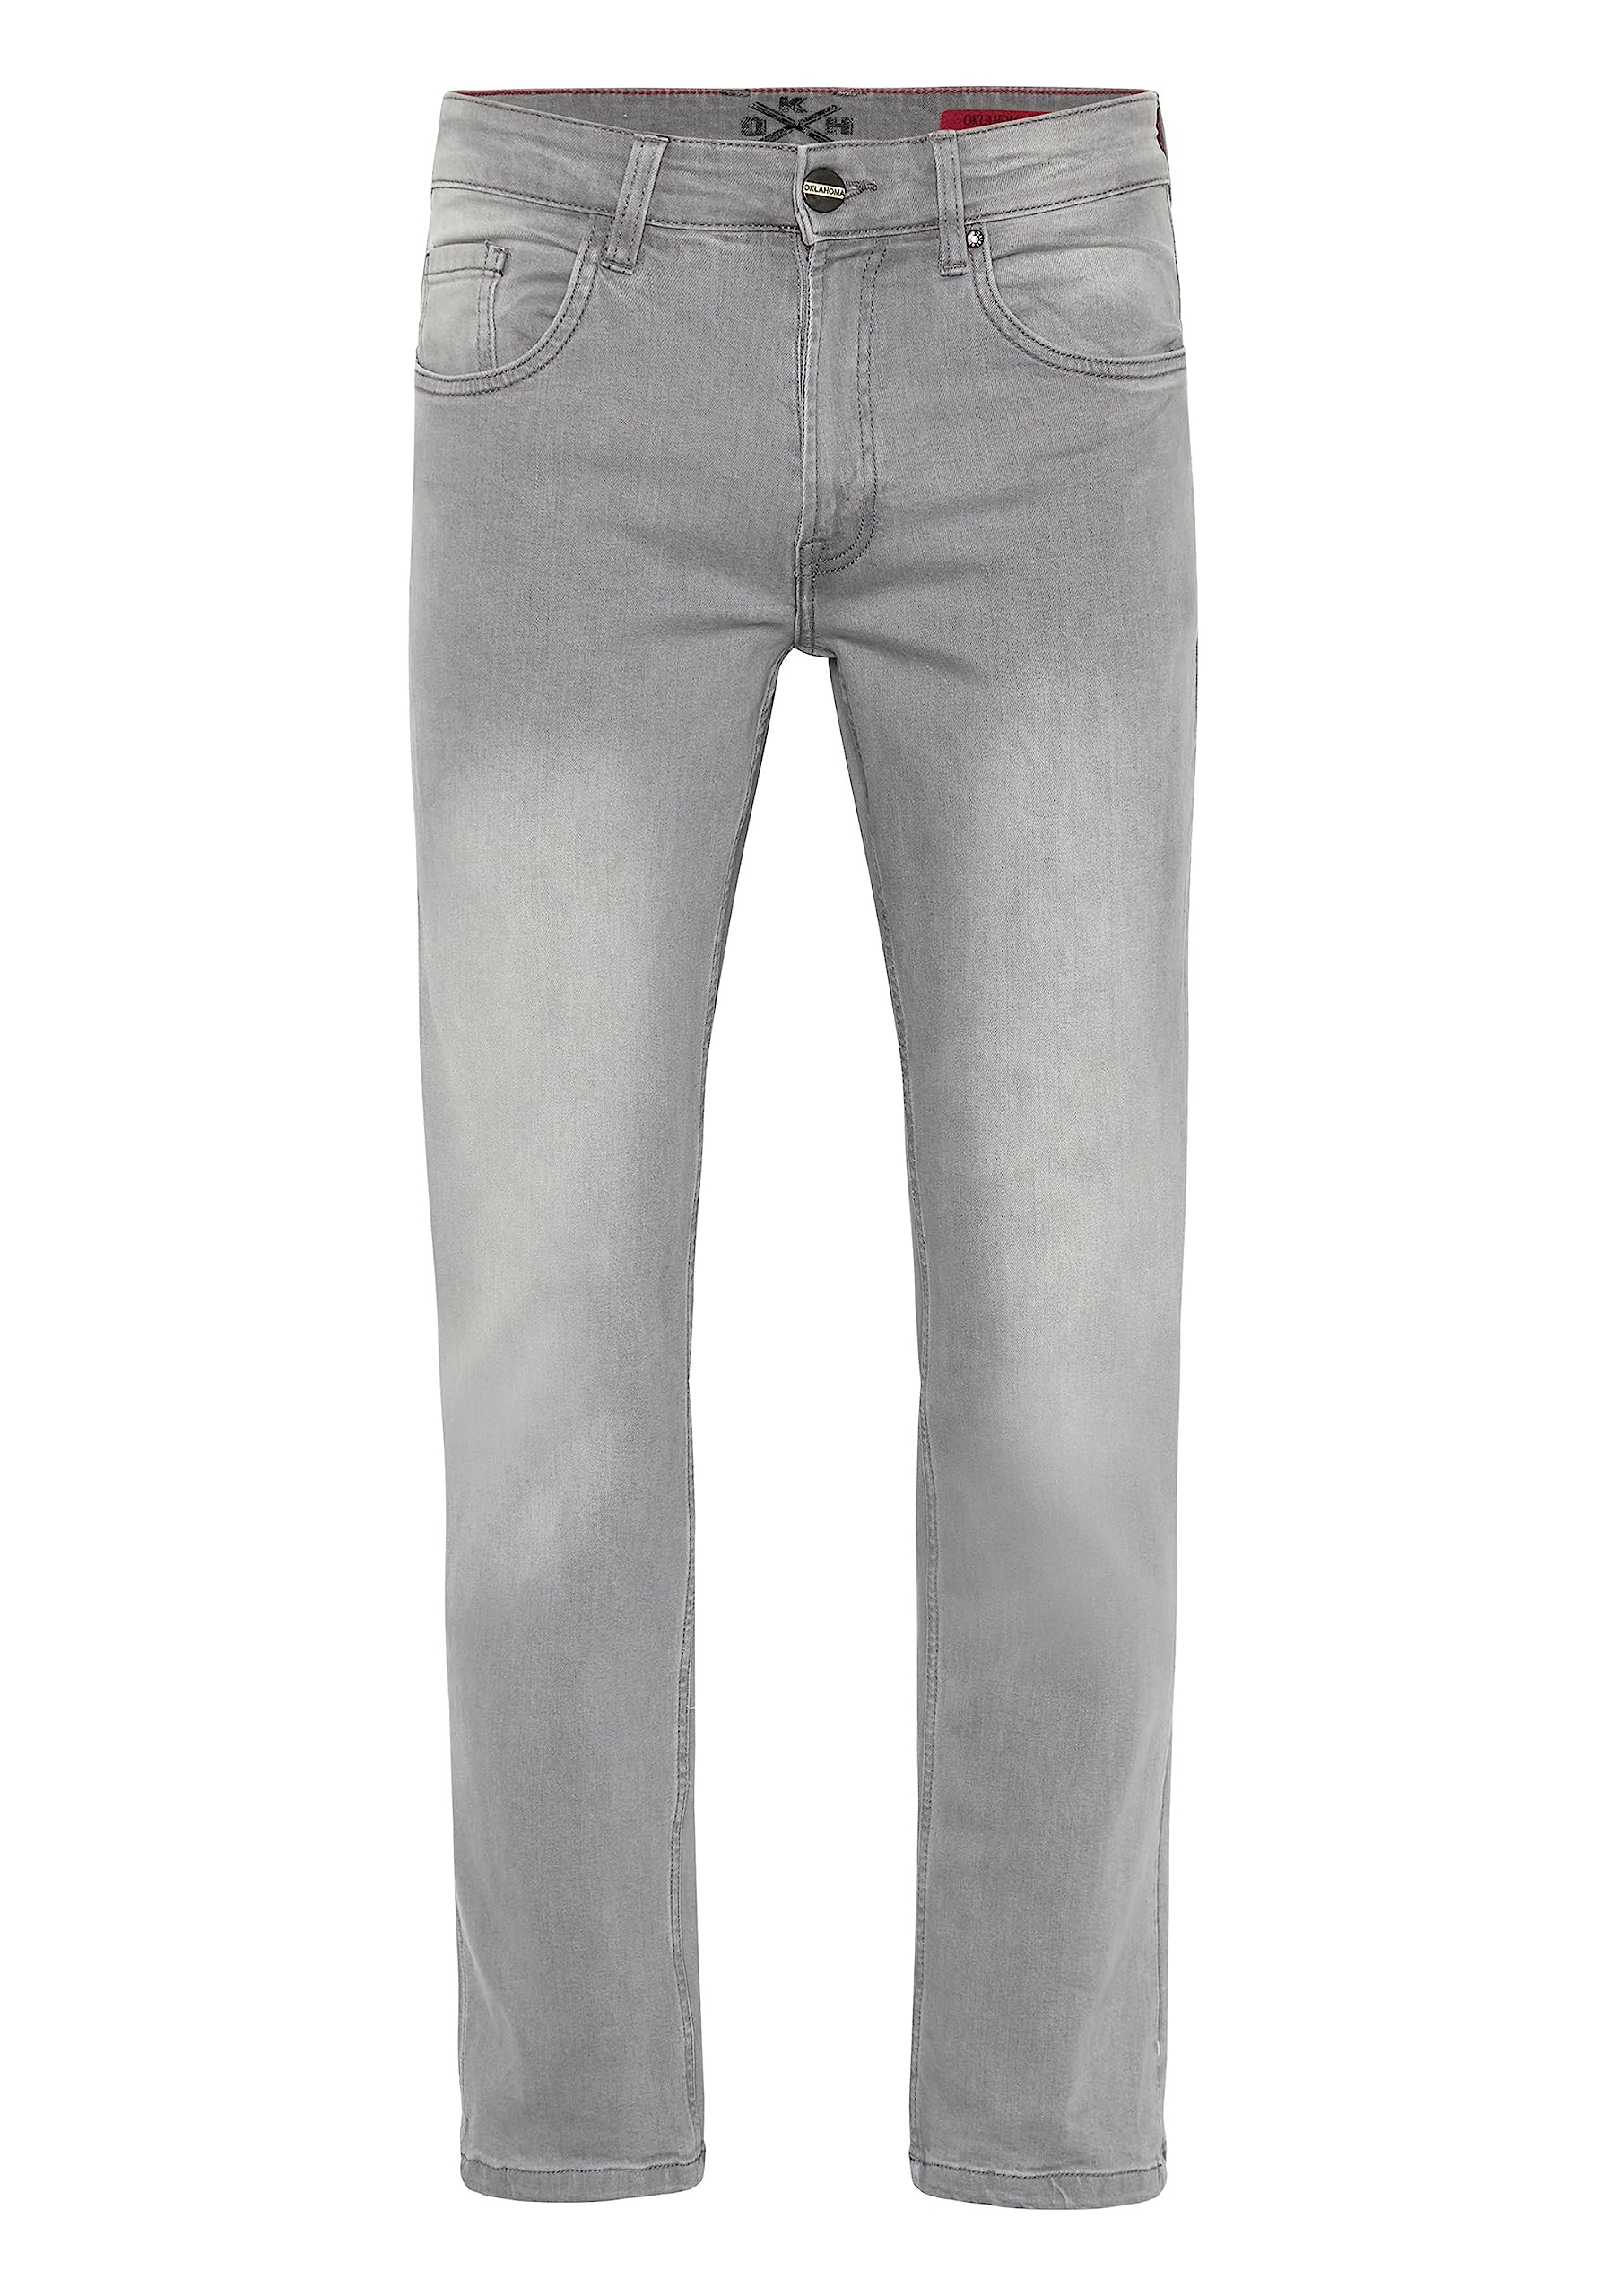 Oklahoma Jeans Herren R140-GRN Straight Jeans, Grau (Grey Wash 018), W42/L32